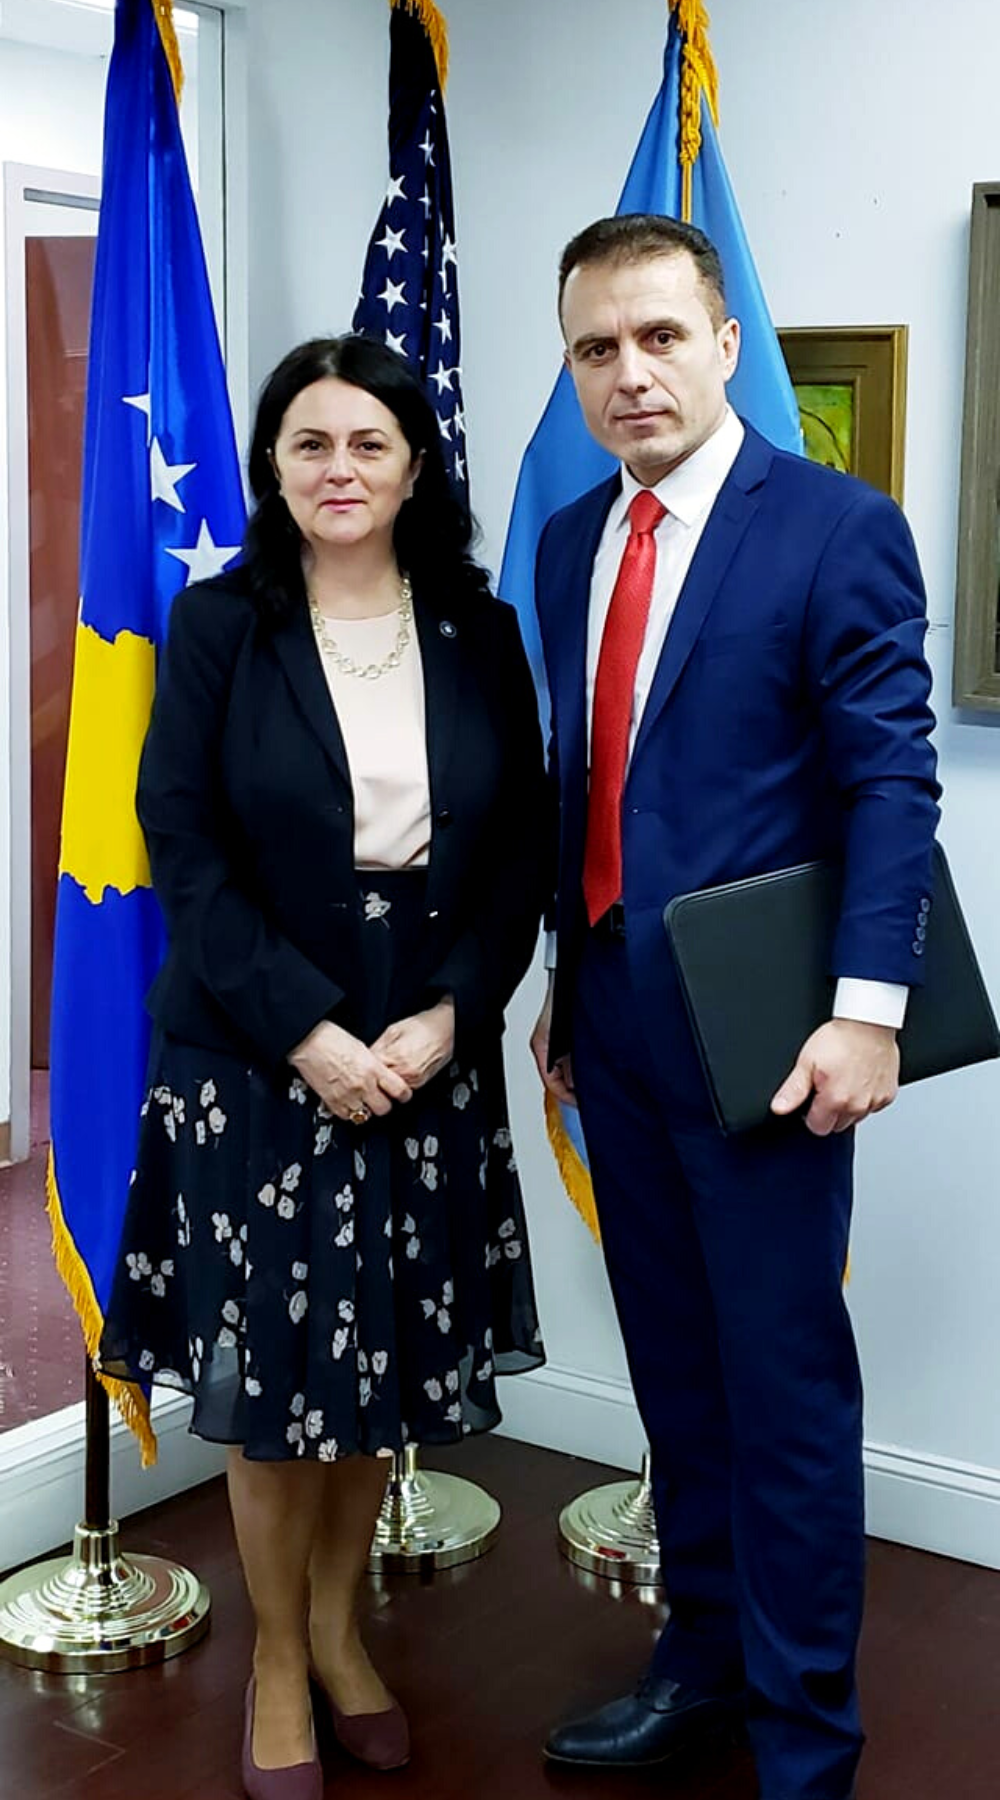 Fatrmir Bardhoci with the Ambassador of the Republic of Kosovo in New York Mrs. Teuta Sahatqija